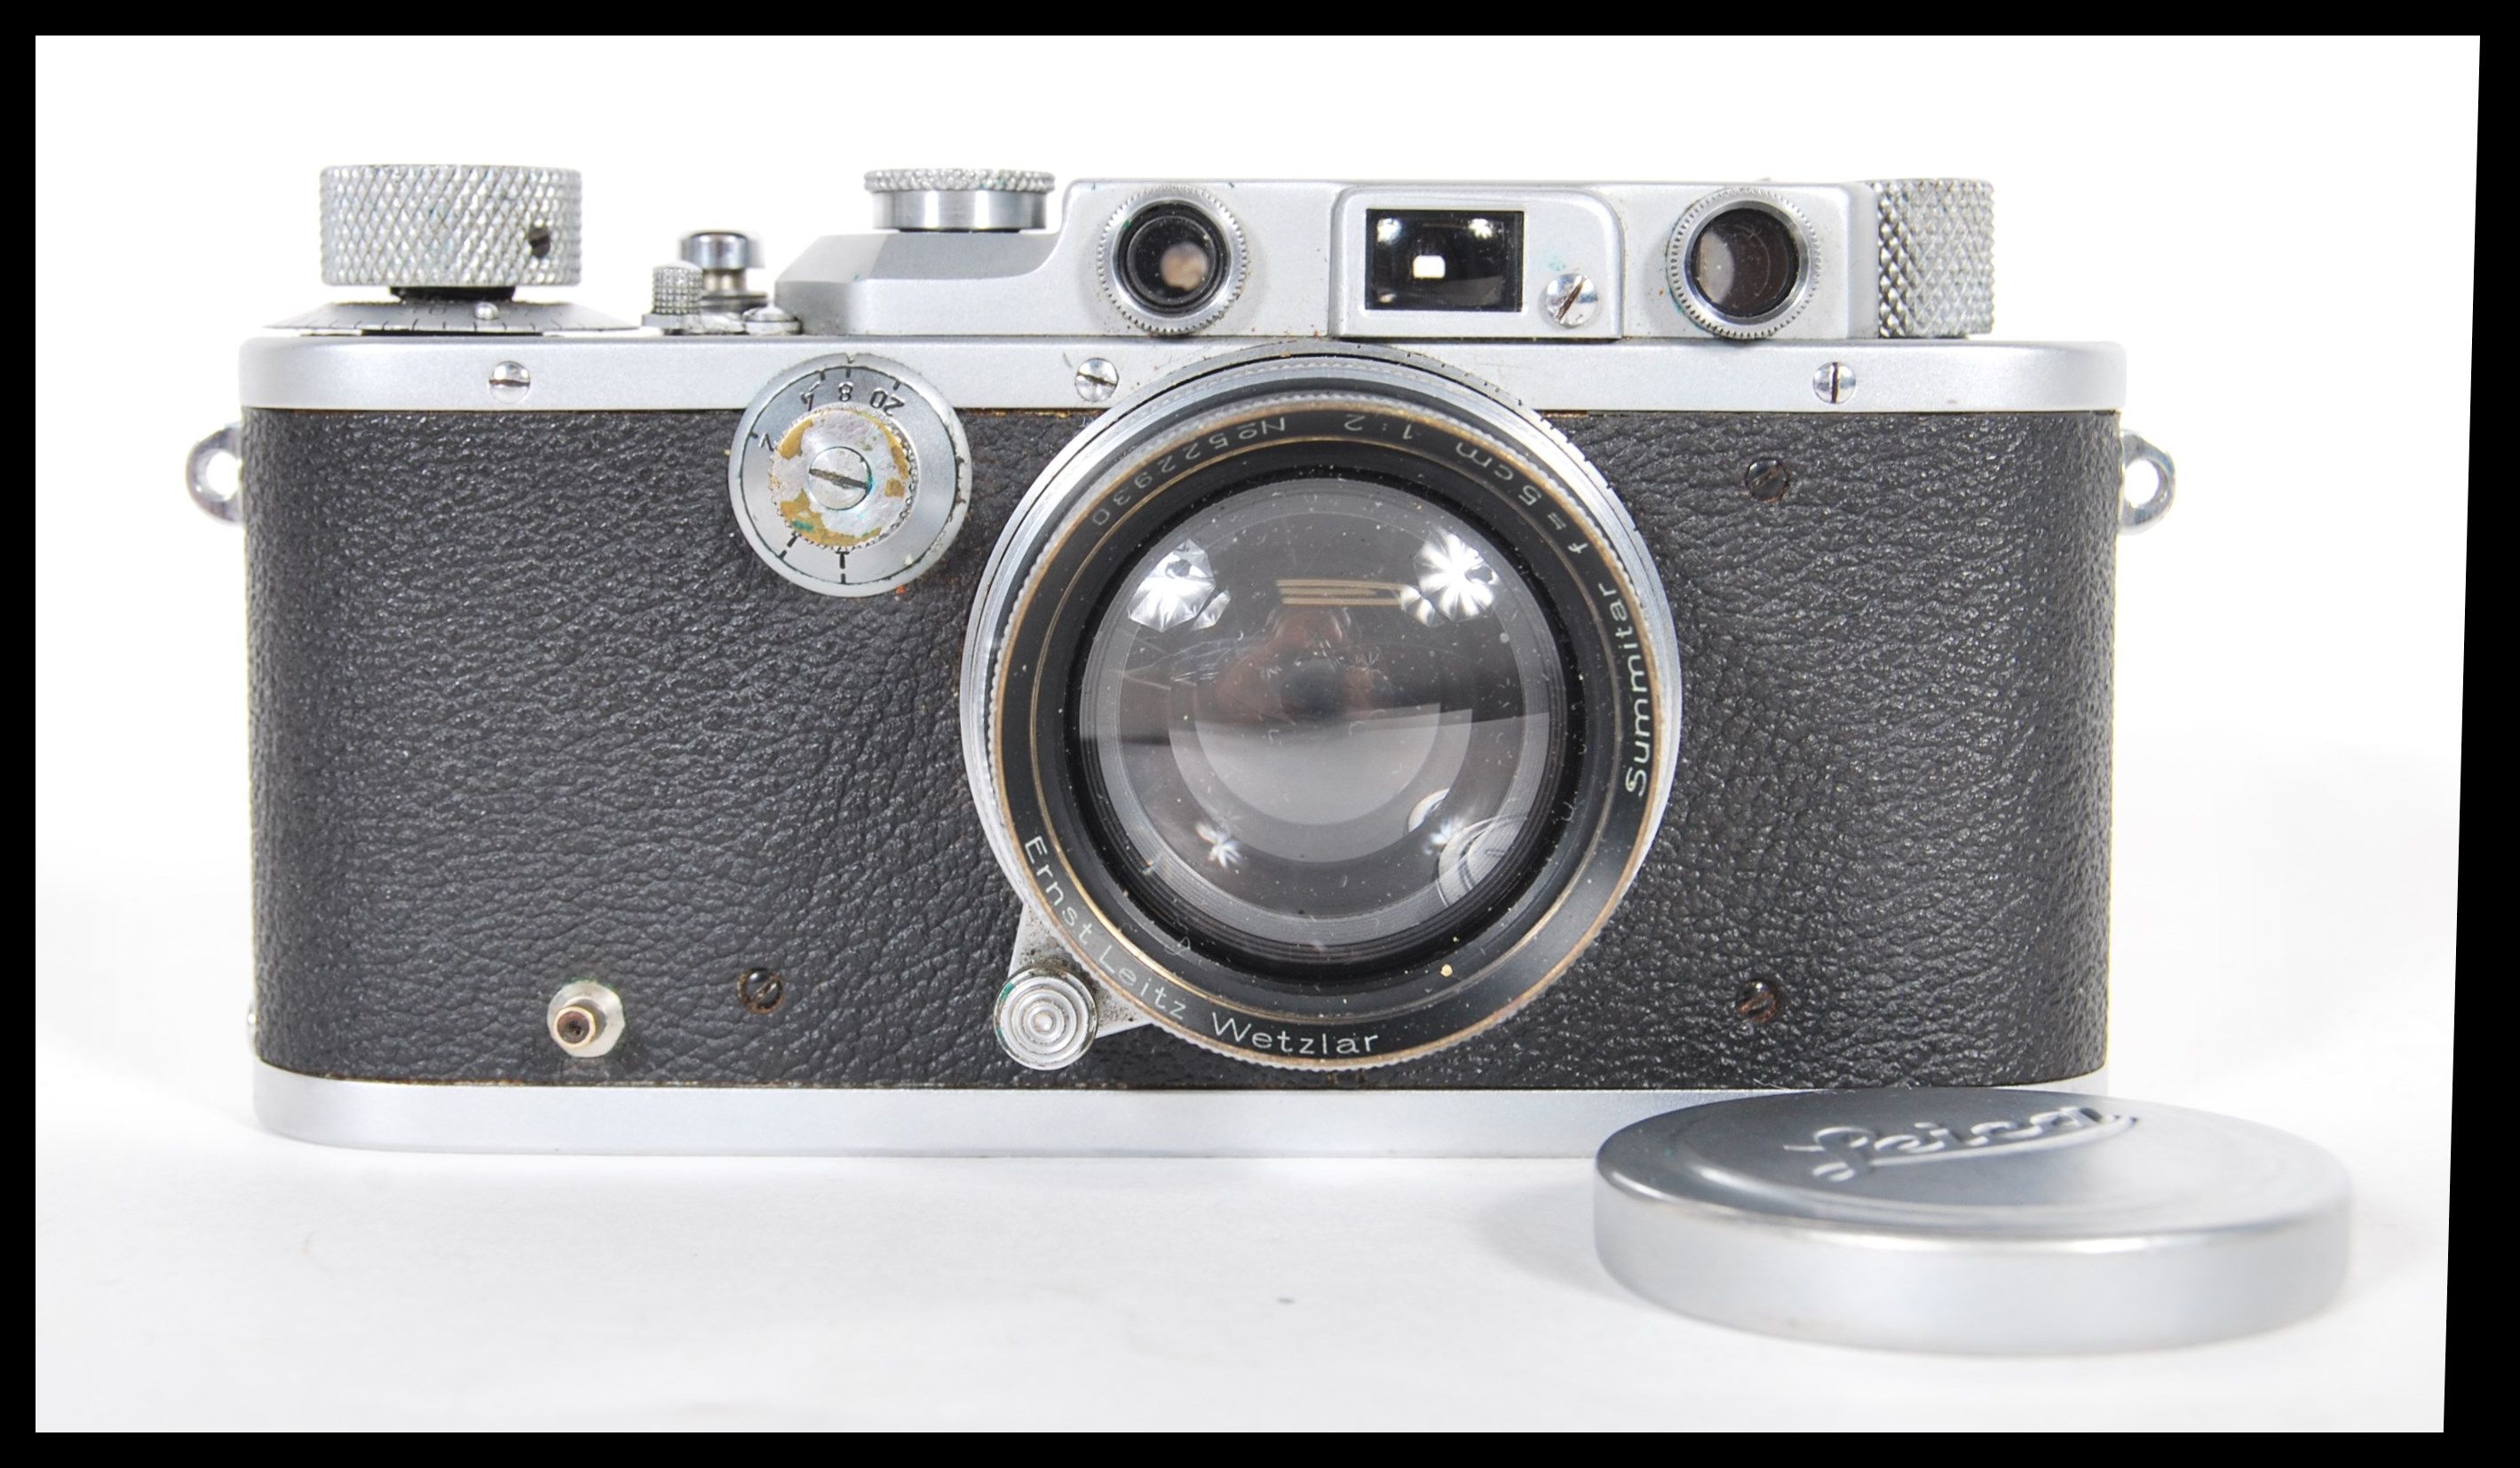 A Leica lll D.P.R Rangefinder chrome camera by Ernst Leitz Wetzlar Germany, Serial number 343924.